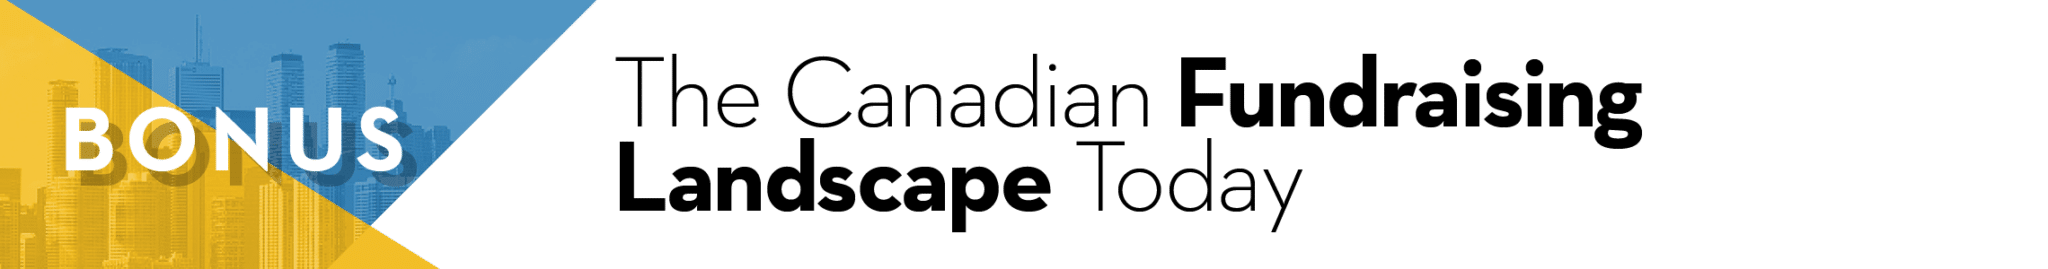 Bonus: The Canadian Fundraising Landscape Today